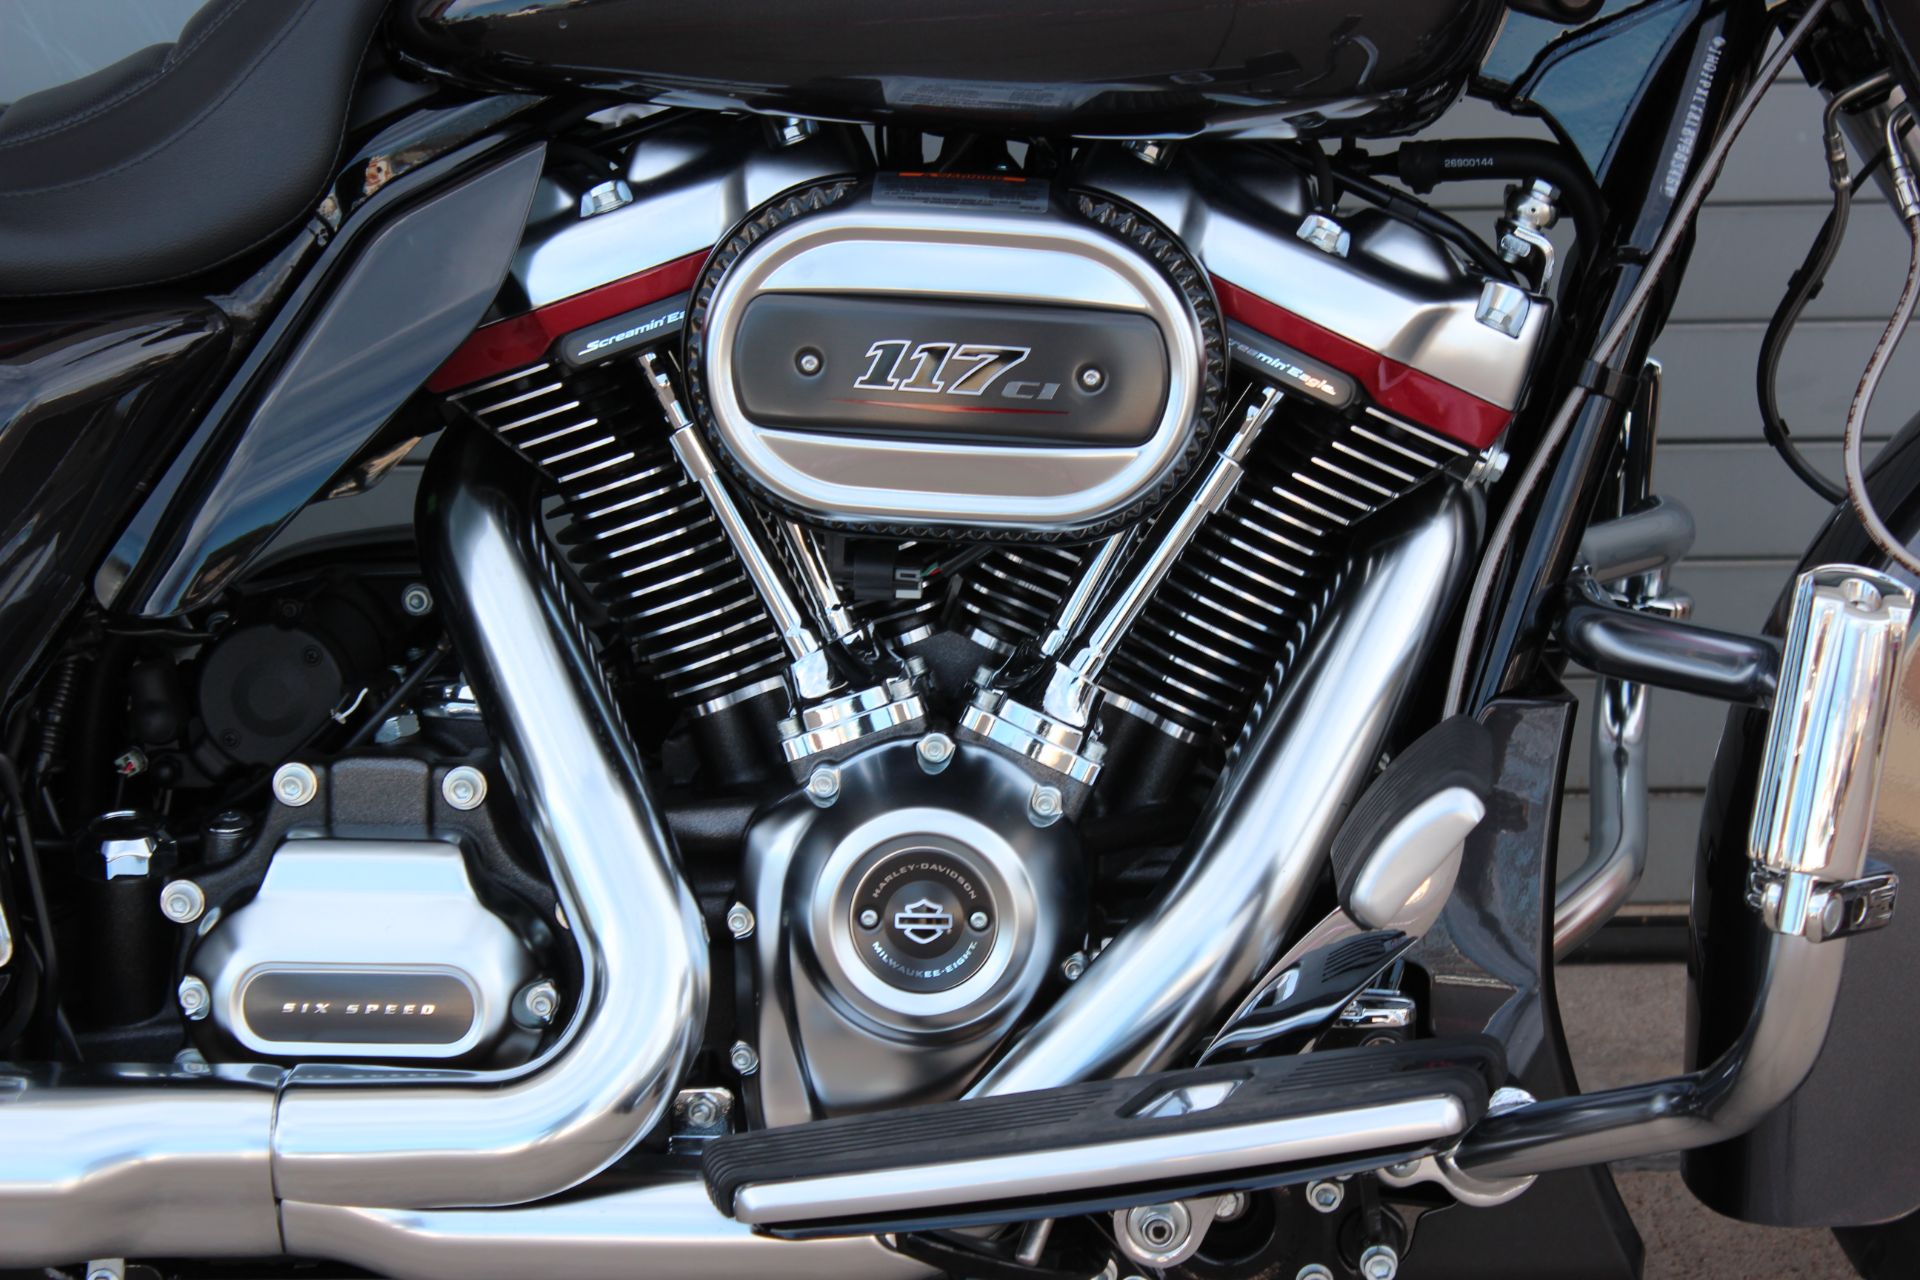 2020 Harley-Davidson CVO™ Street Glide® in Grand Prairie, Texas - Photo 7